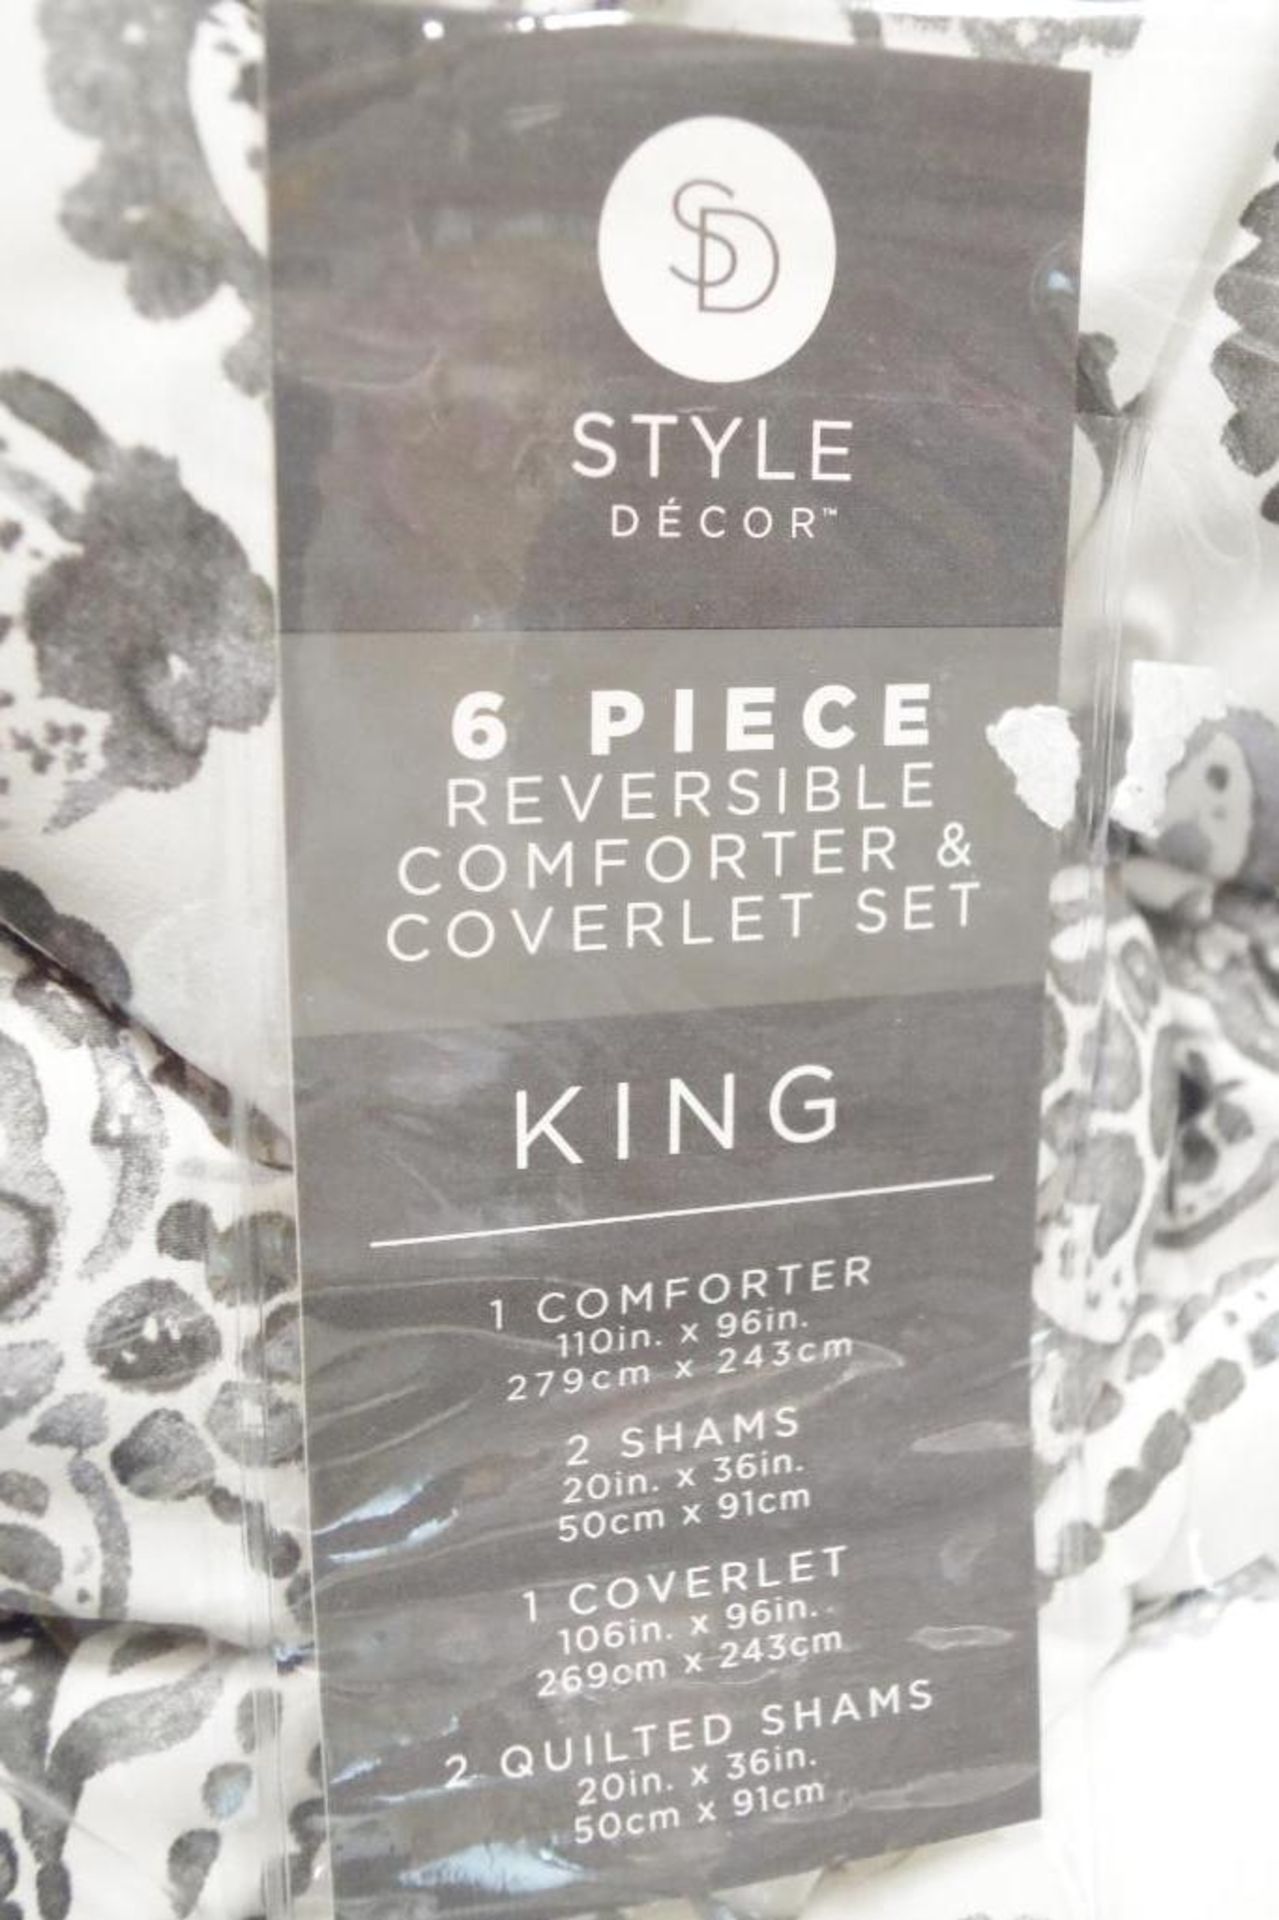 STYLE DECOR King 6-Piece Reversible Comforter & Coverlet Set, Store Return - Image 2 of 4